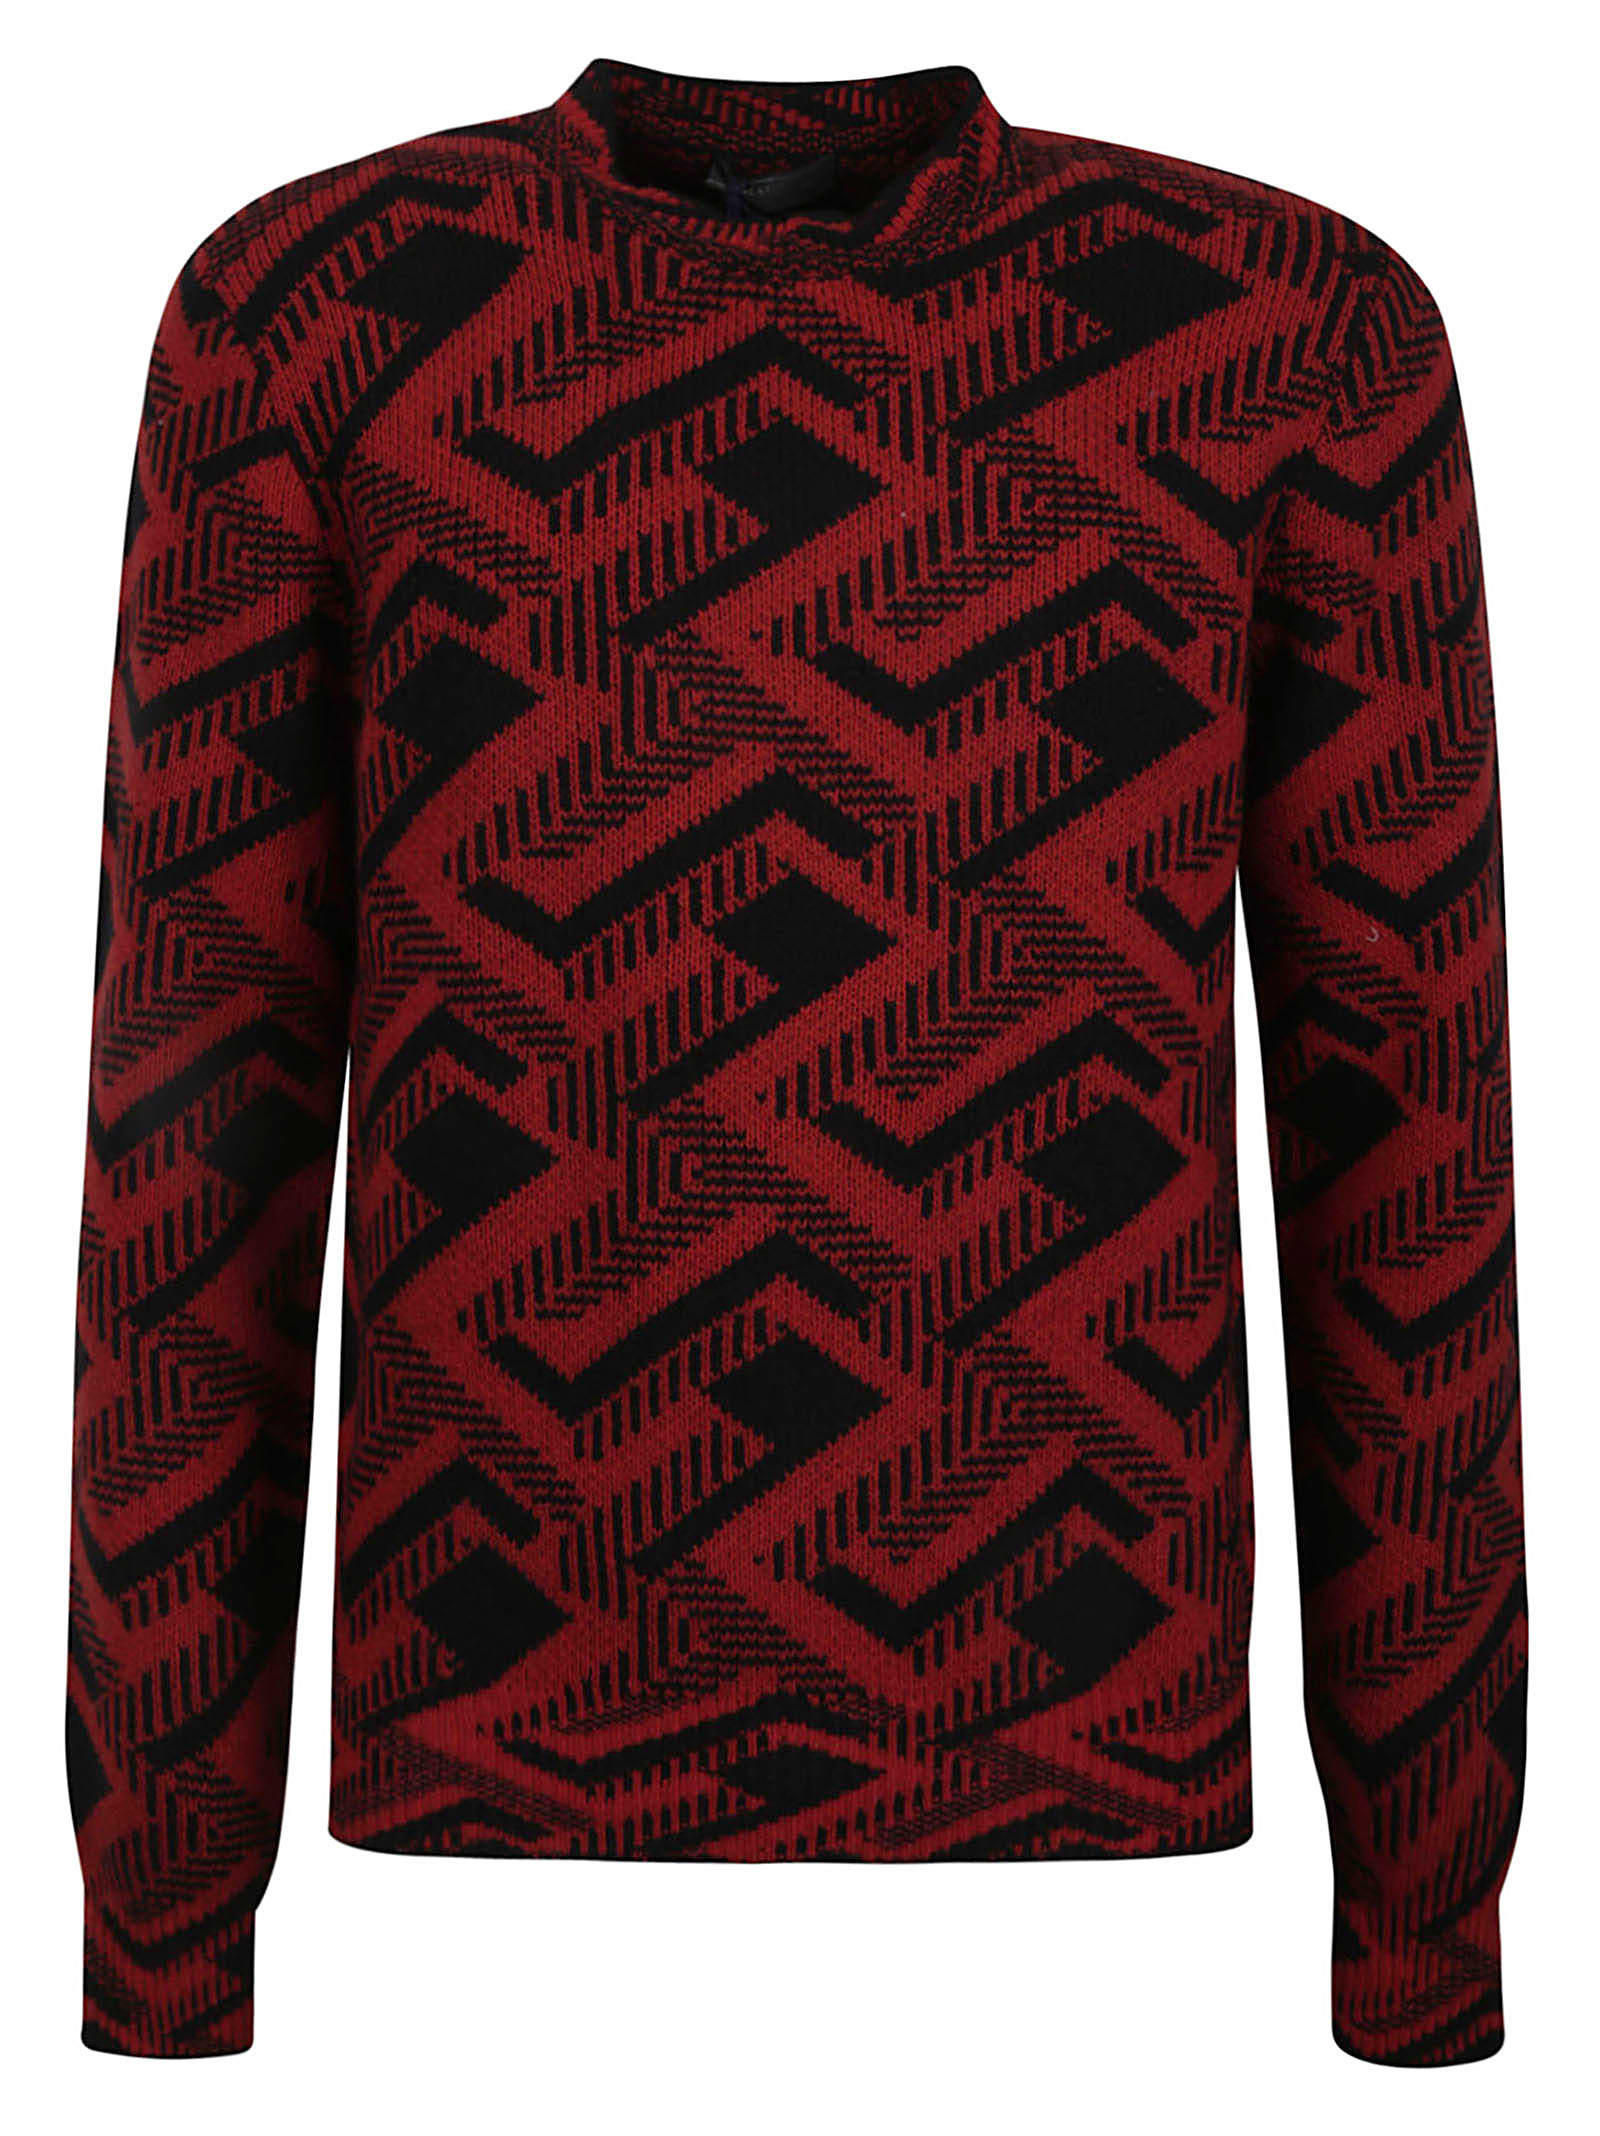 Prada Patterned Ribbed Sweater